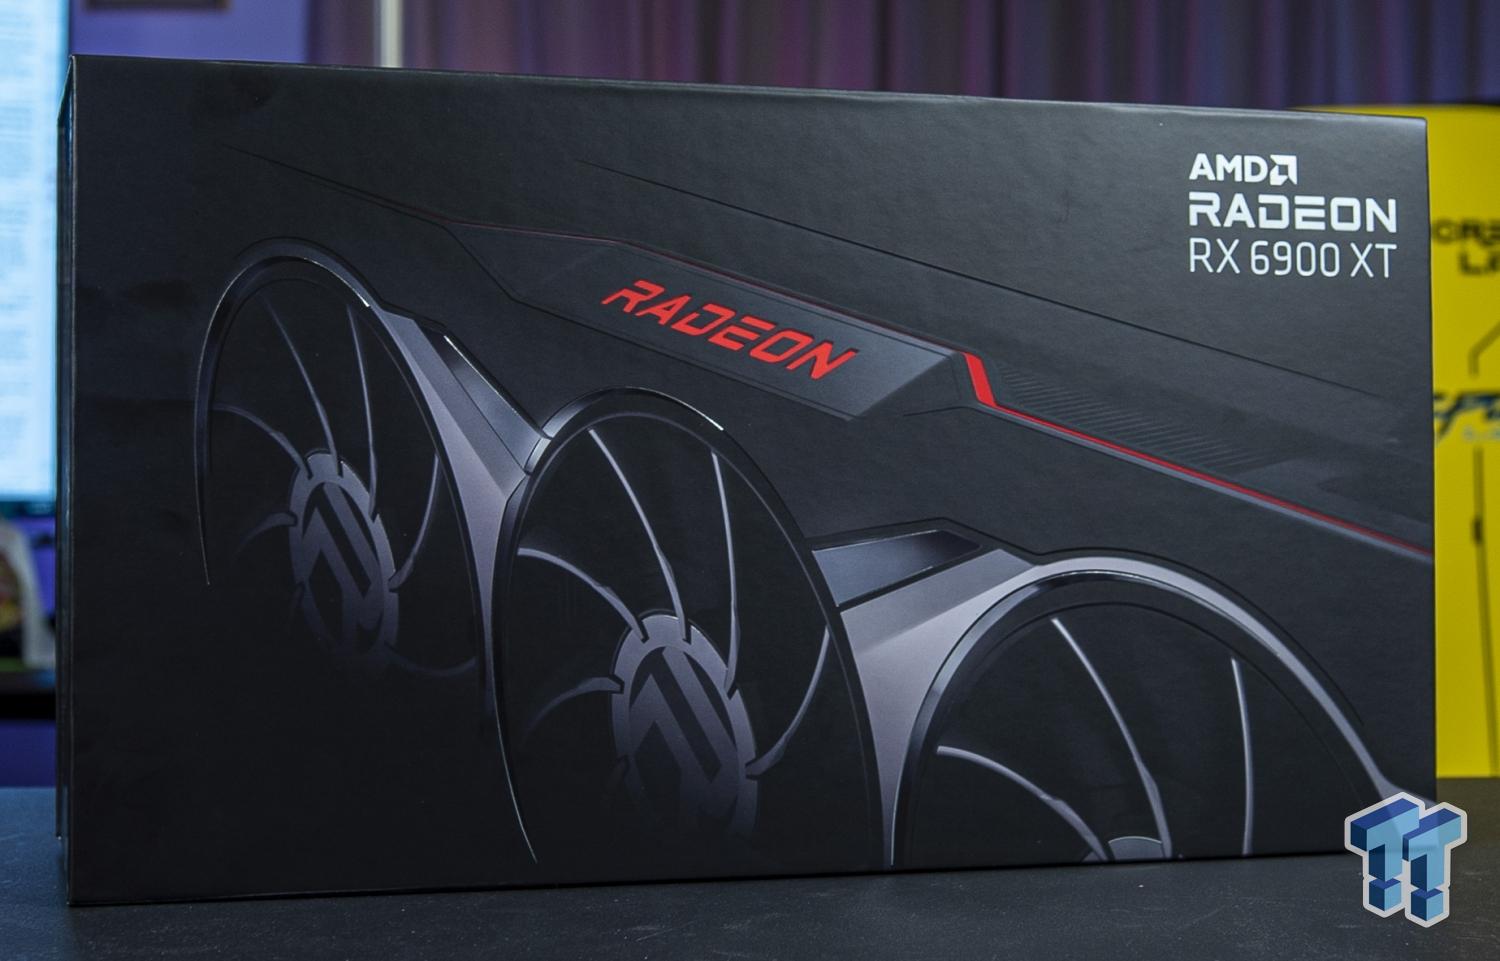 AMD Radeon RX 6900 XT Review - The Biggest Big Navi - Pictures & Teardown